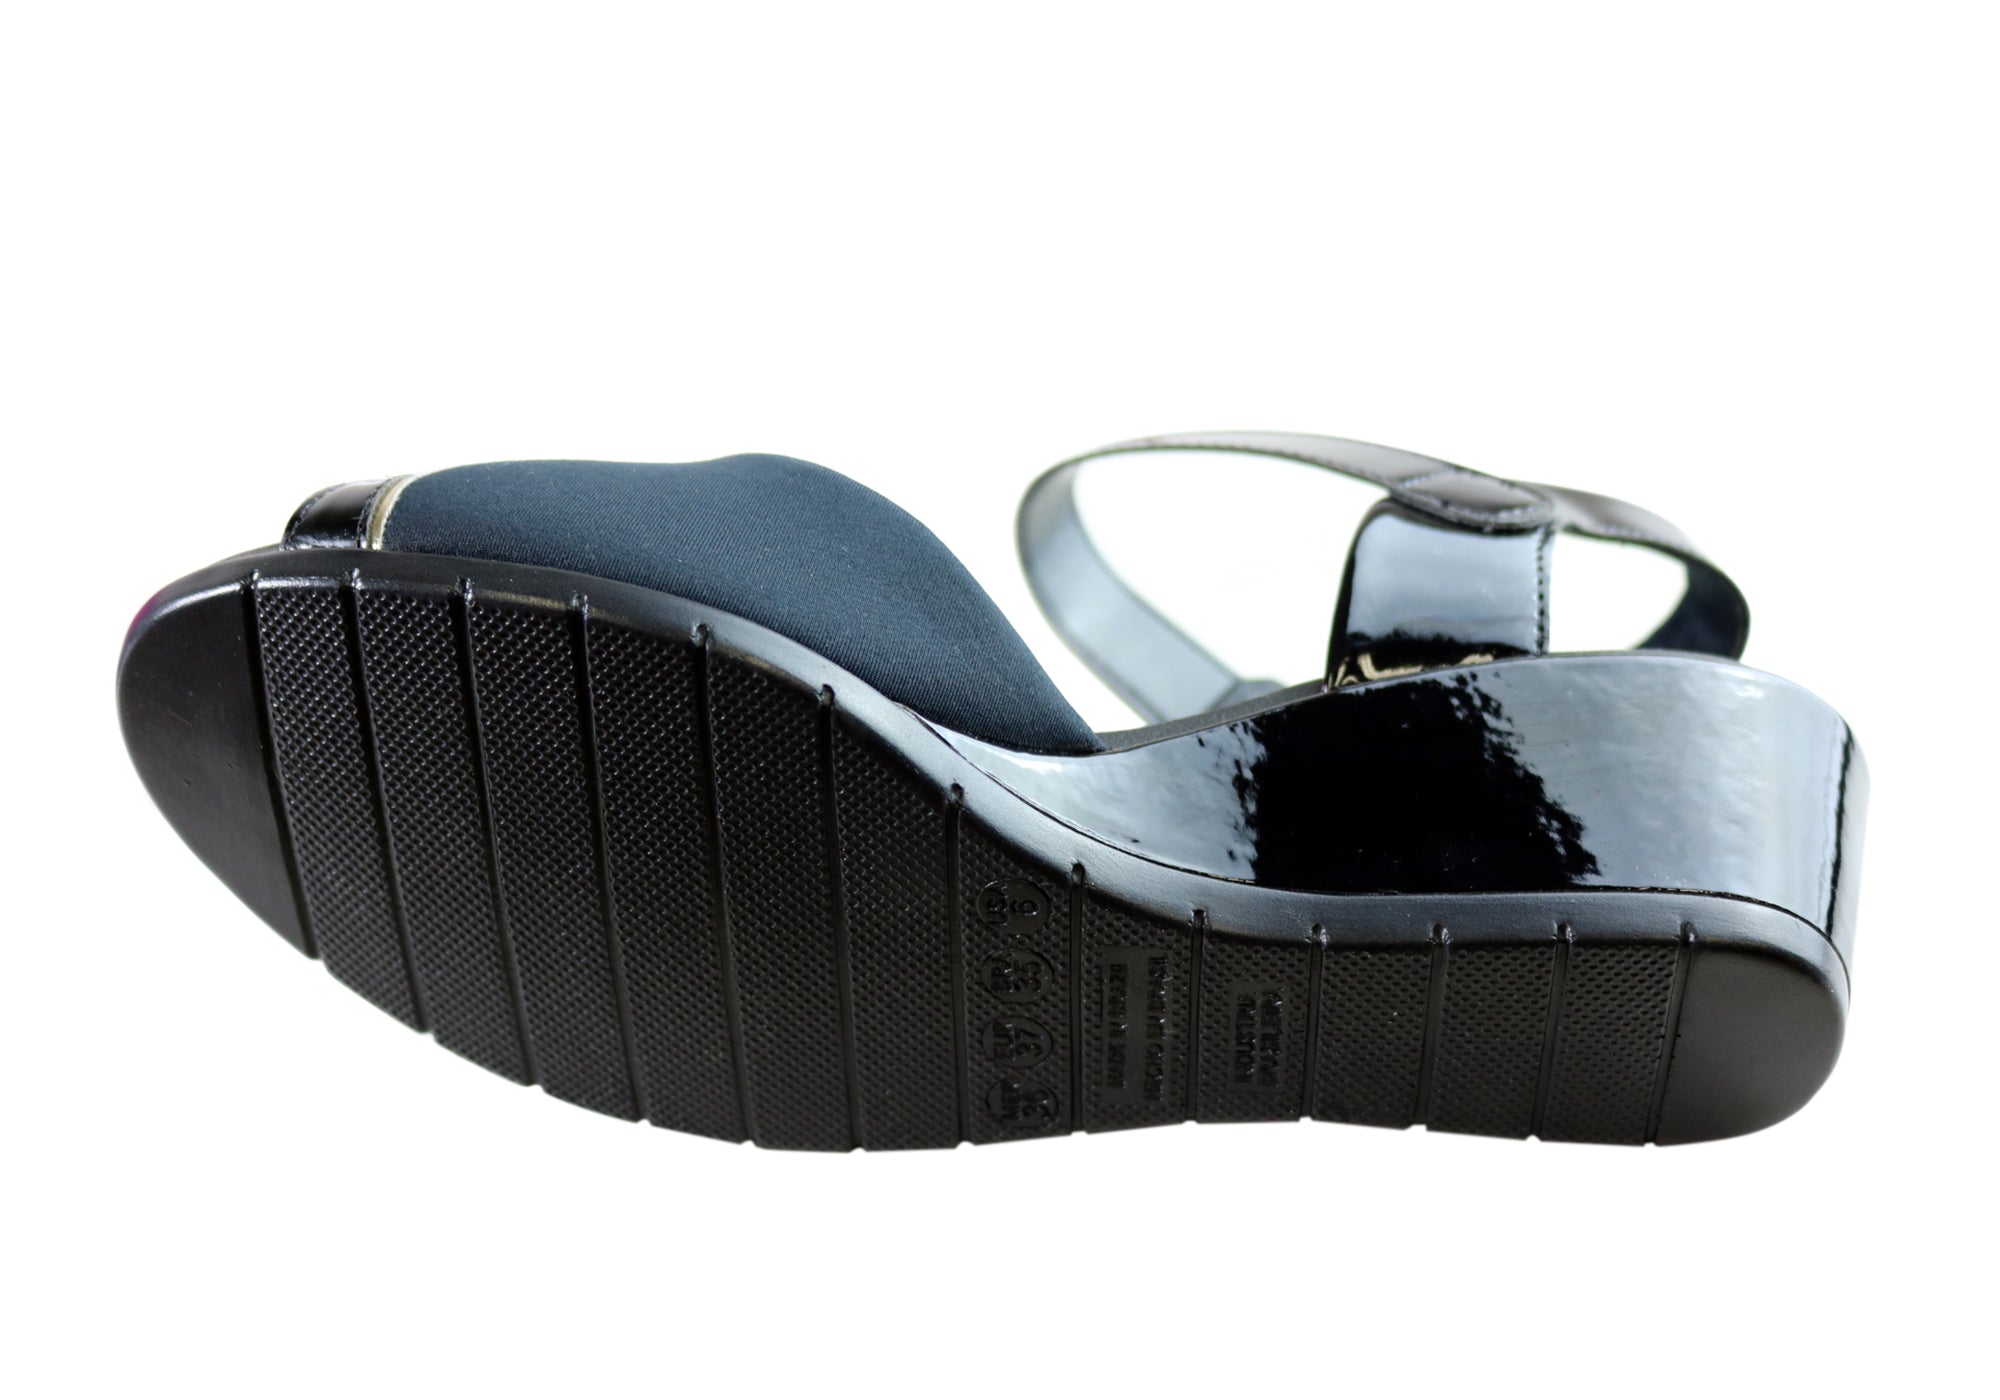 Malu Supercomfort Greer Womens Comfort Wedge Sandals Made In Brazil